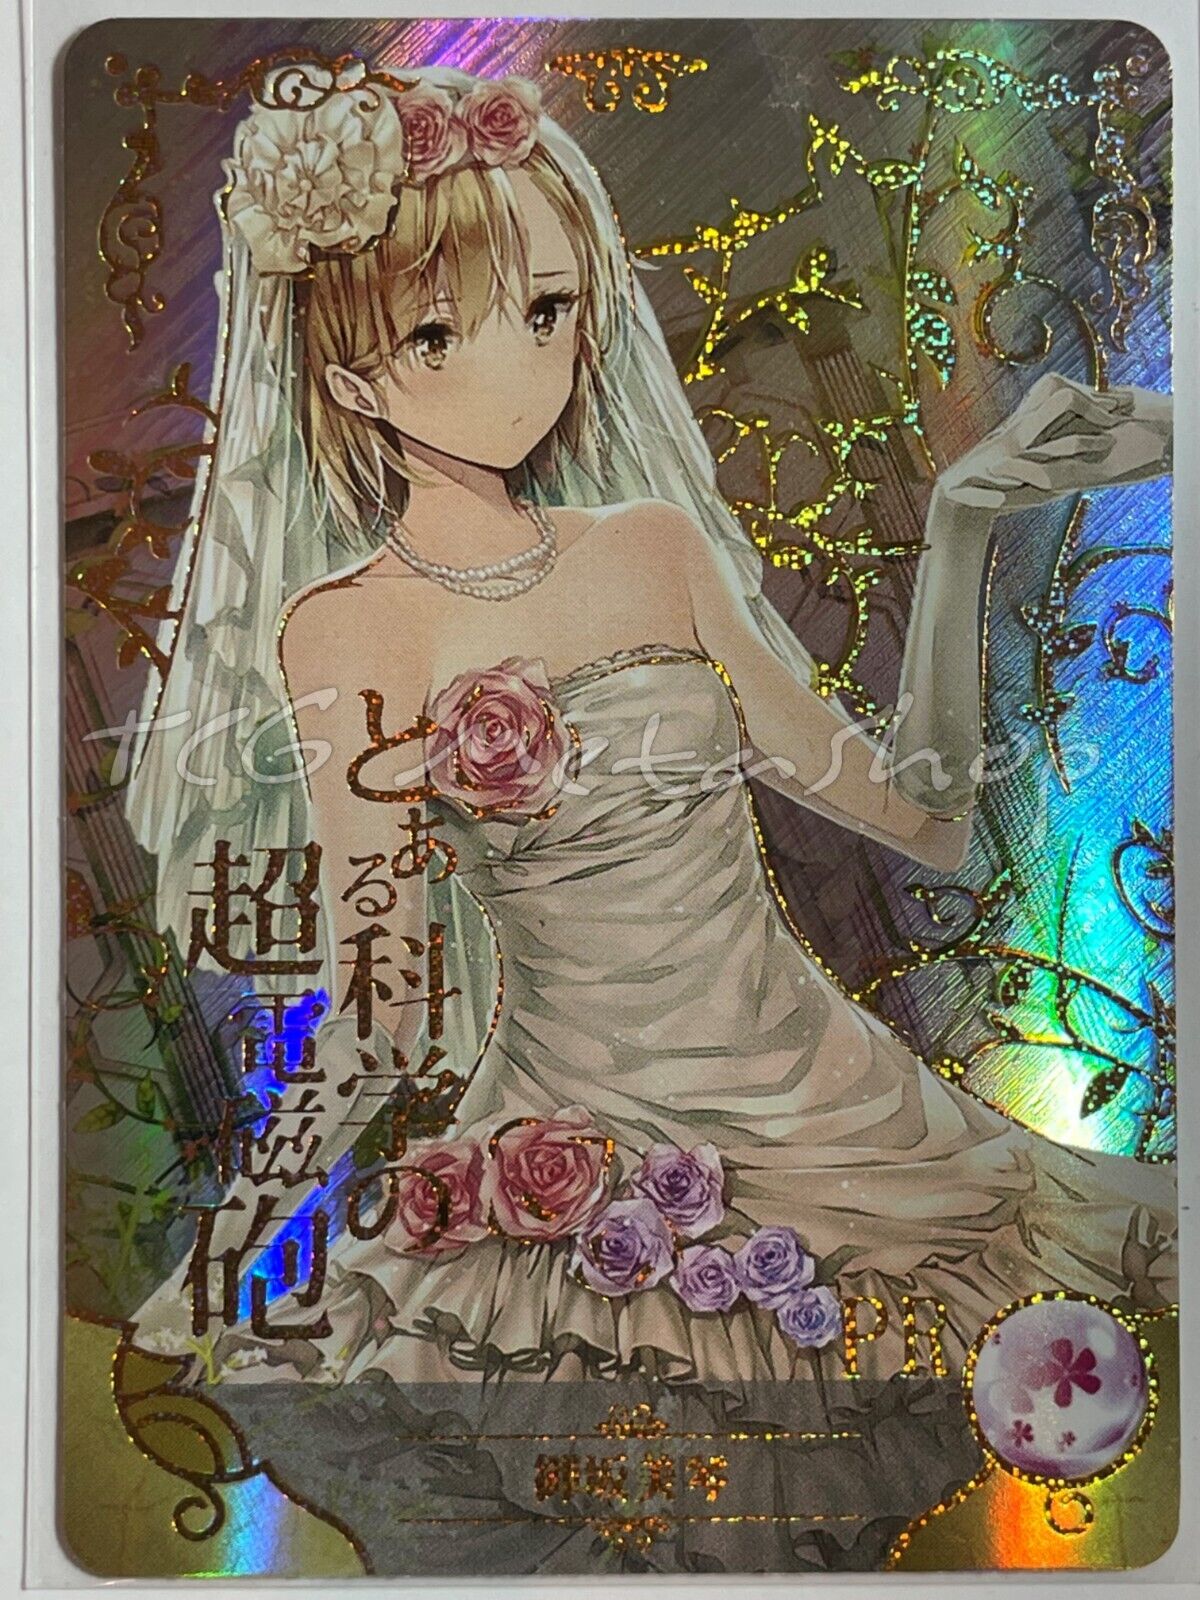 🔥  10m01 [Pick your Singles 120-144 + PR] Goddess Story Waifu Anime Cards 🔥